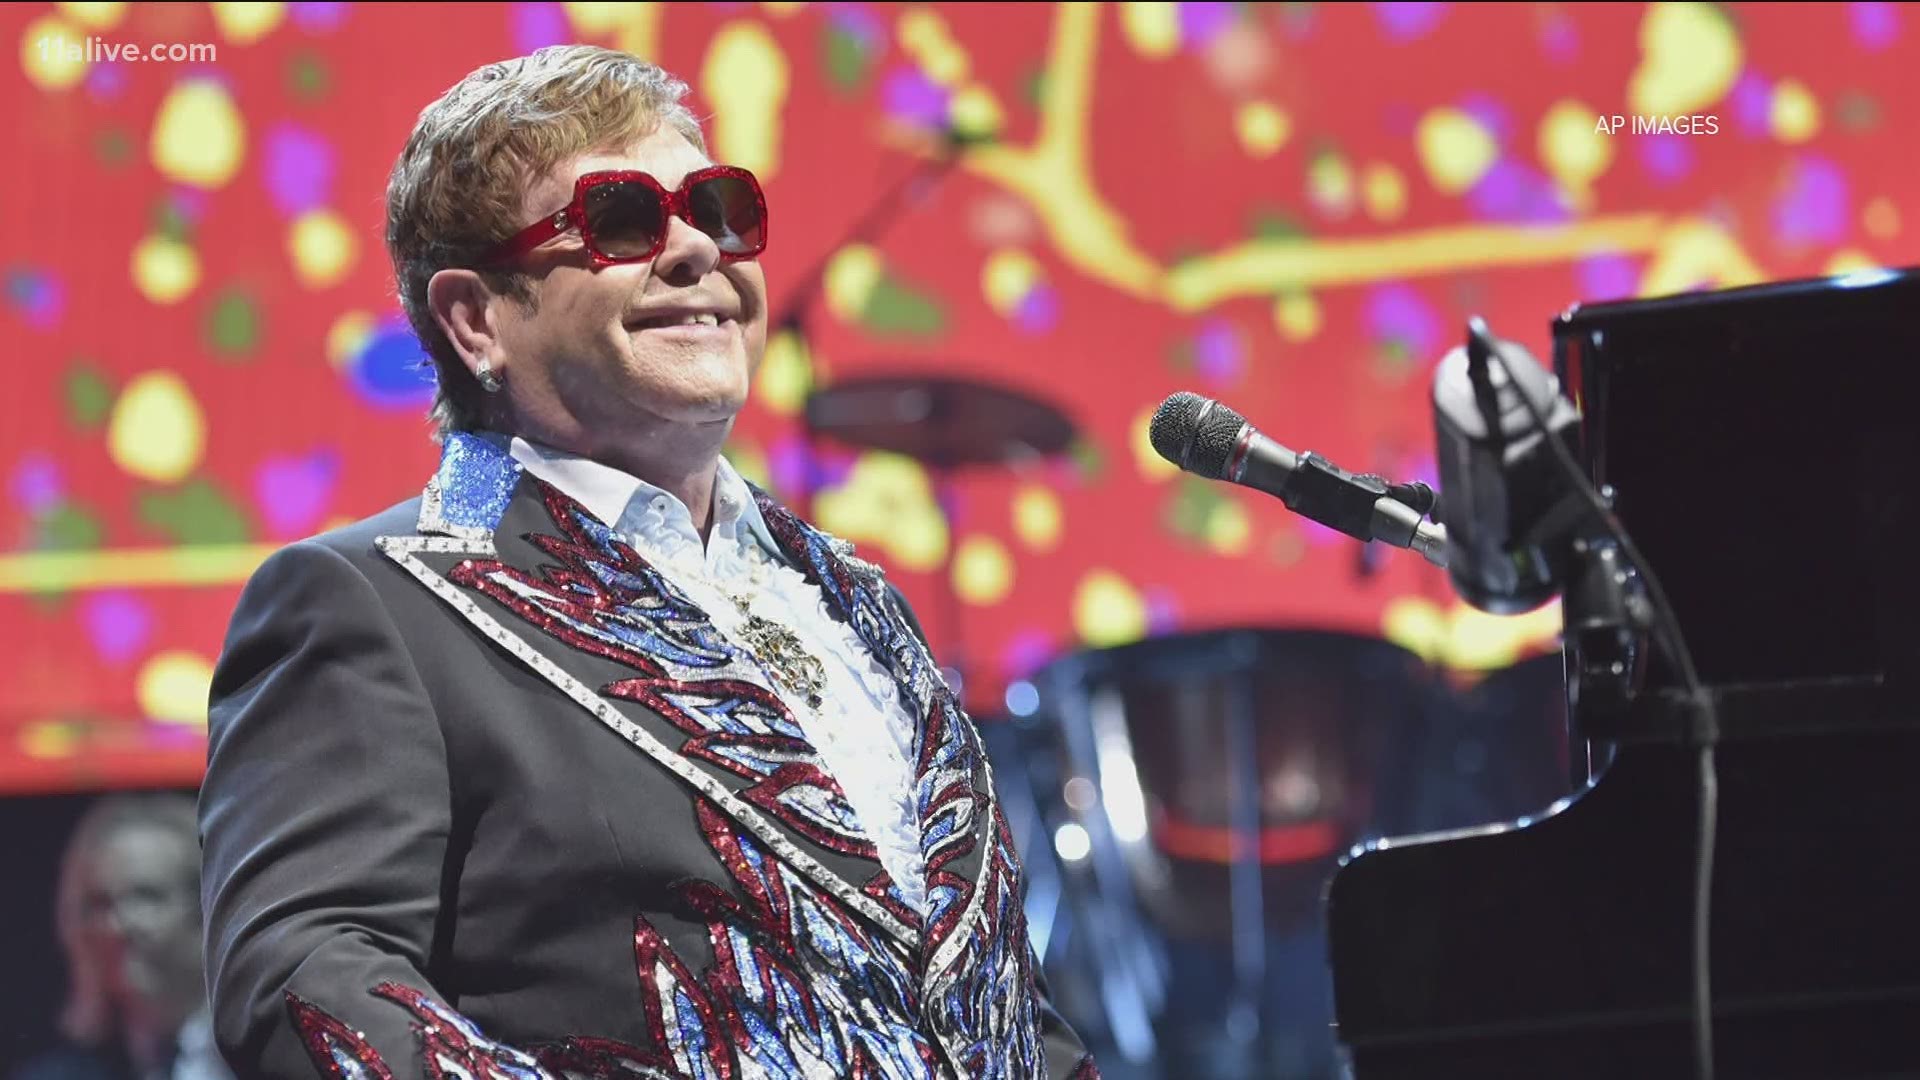 Elton John tour dates, Mercedes-Benz stadium in Atlanta